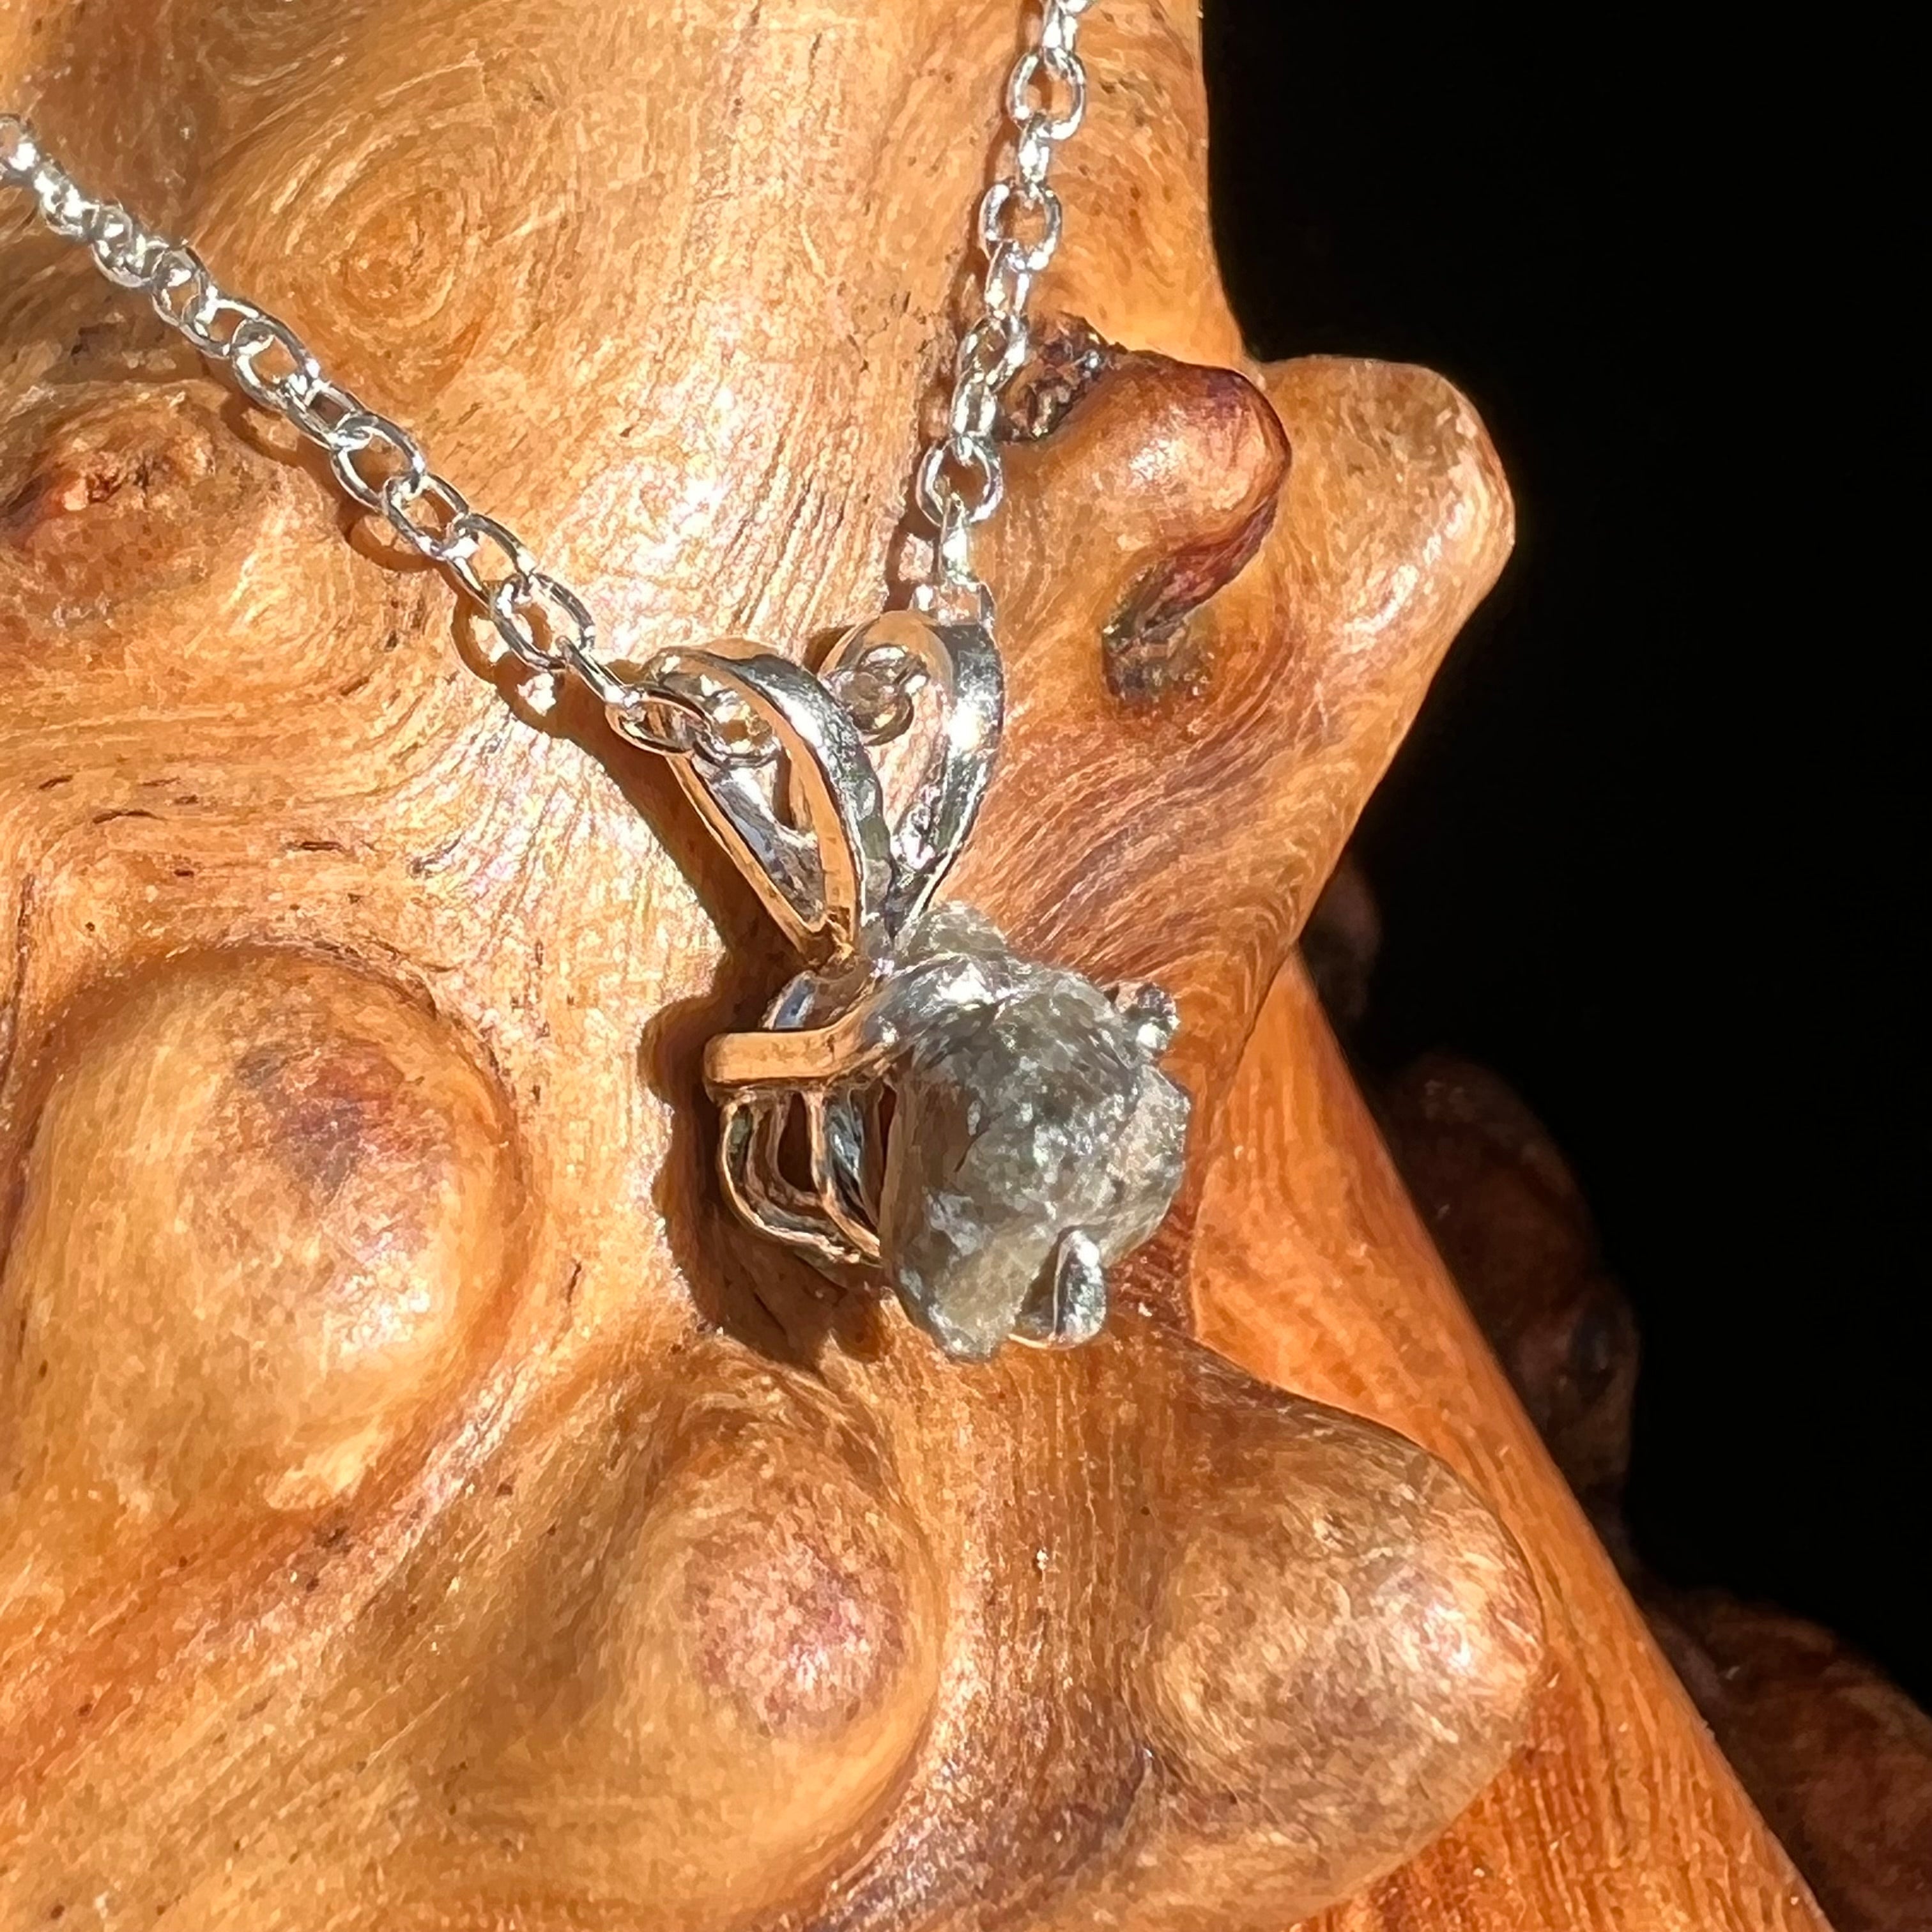 Meteorite Necklace - Meteorite Jewelry - Hand Crafted Meteorite - Silver  Pendant 'Galaxy Compass'